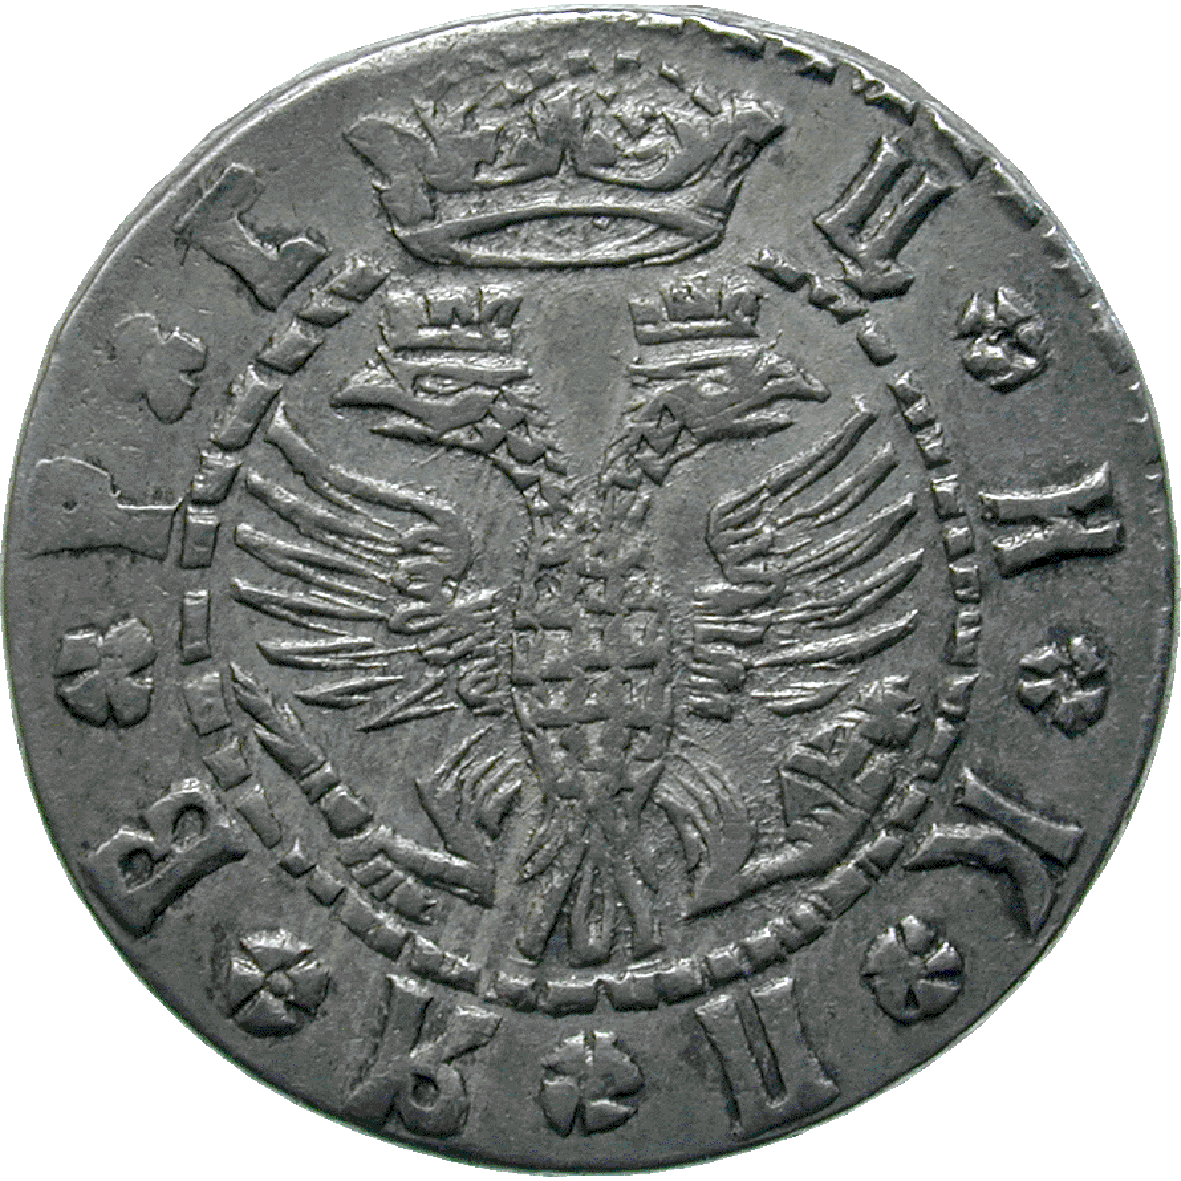 Zarenreich Russland, Peter I. der Grosse, Griwna 1709 (obverse)